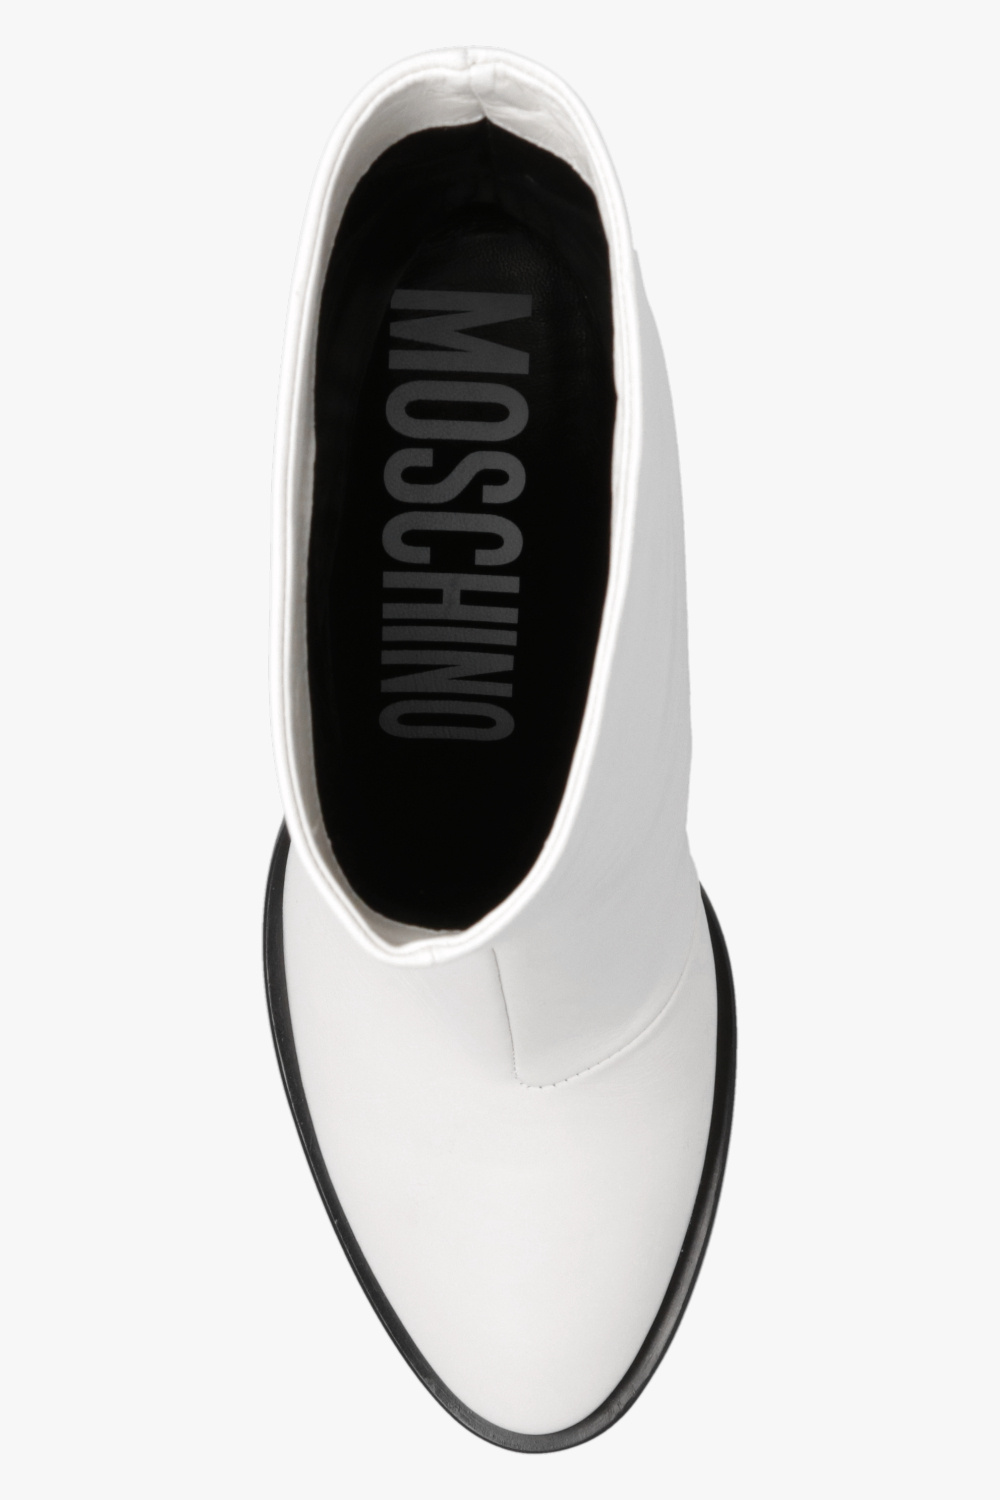 Moschino Nike Air Max Fusion trainers shoes CJ1670 100 uk eu 42.5 us 9 NEW BOX